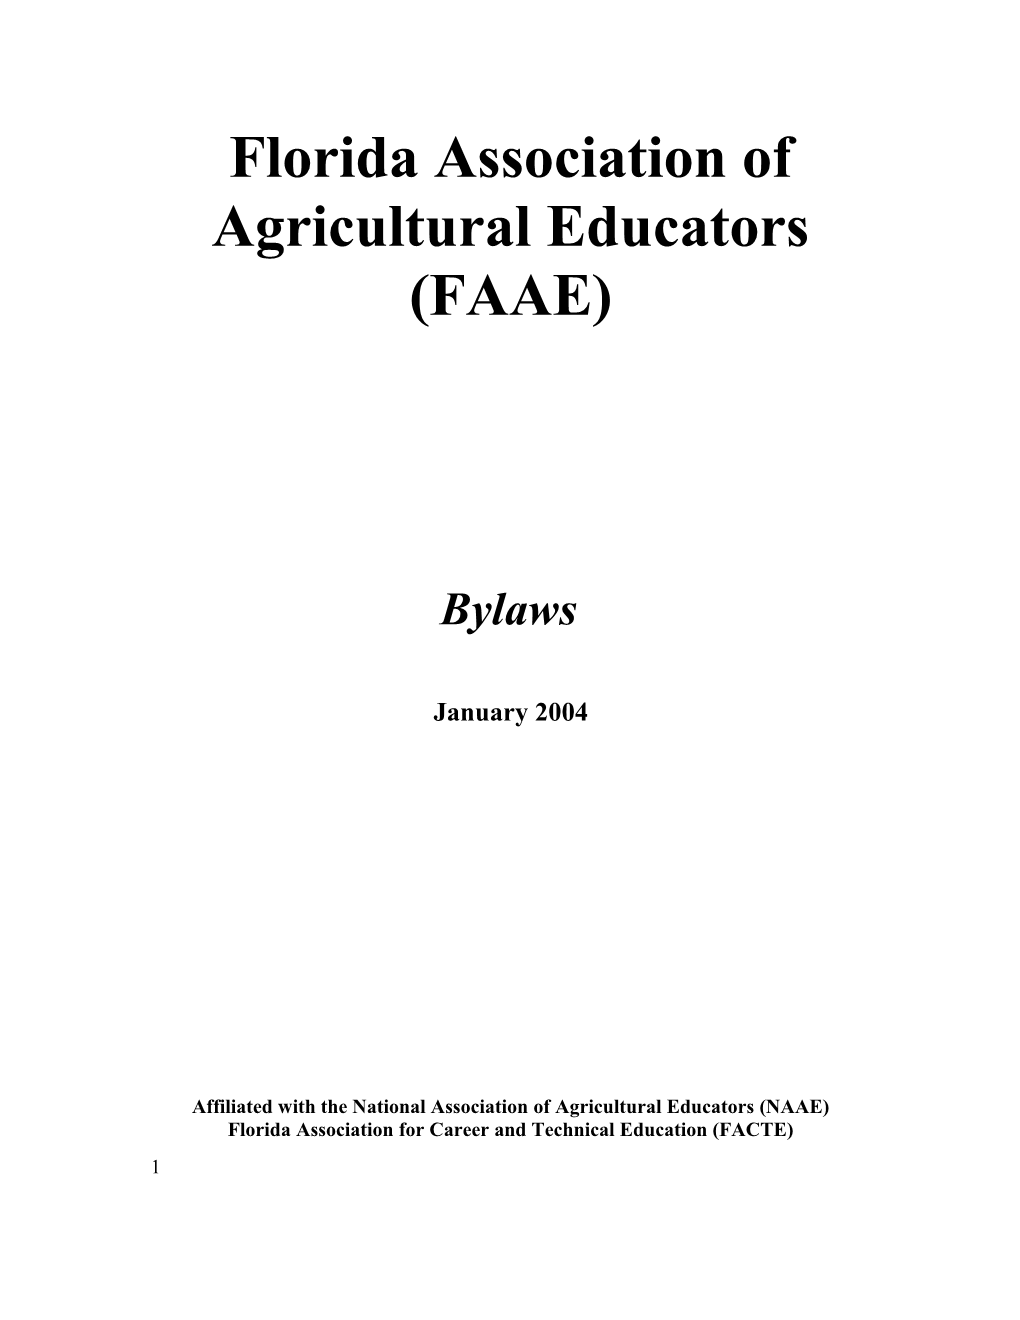 Florida Association of Agriculture Educators